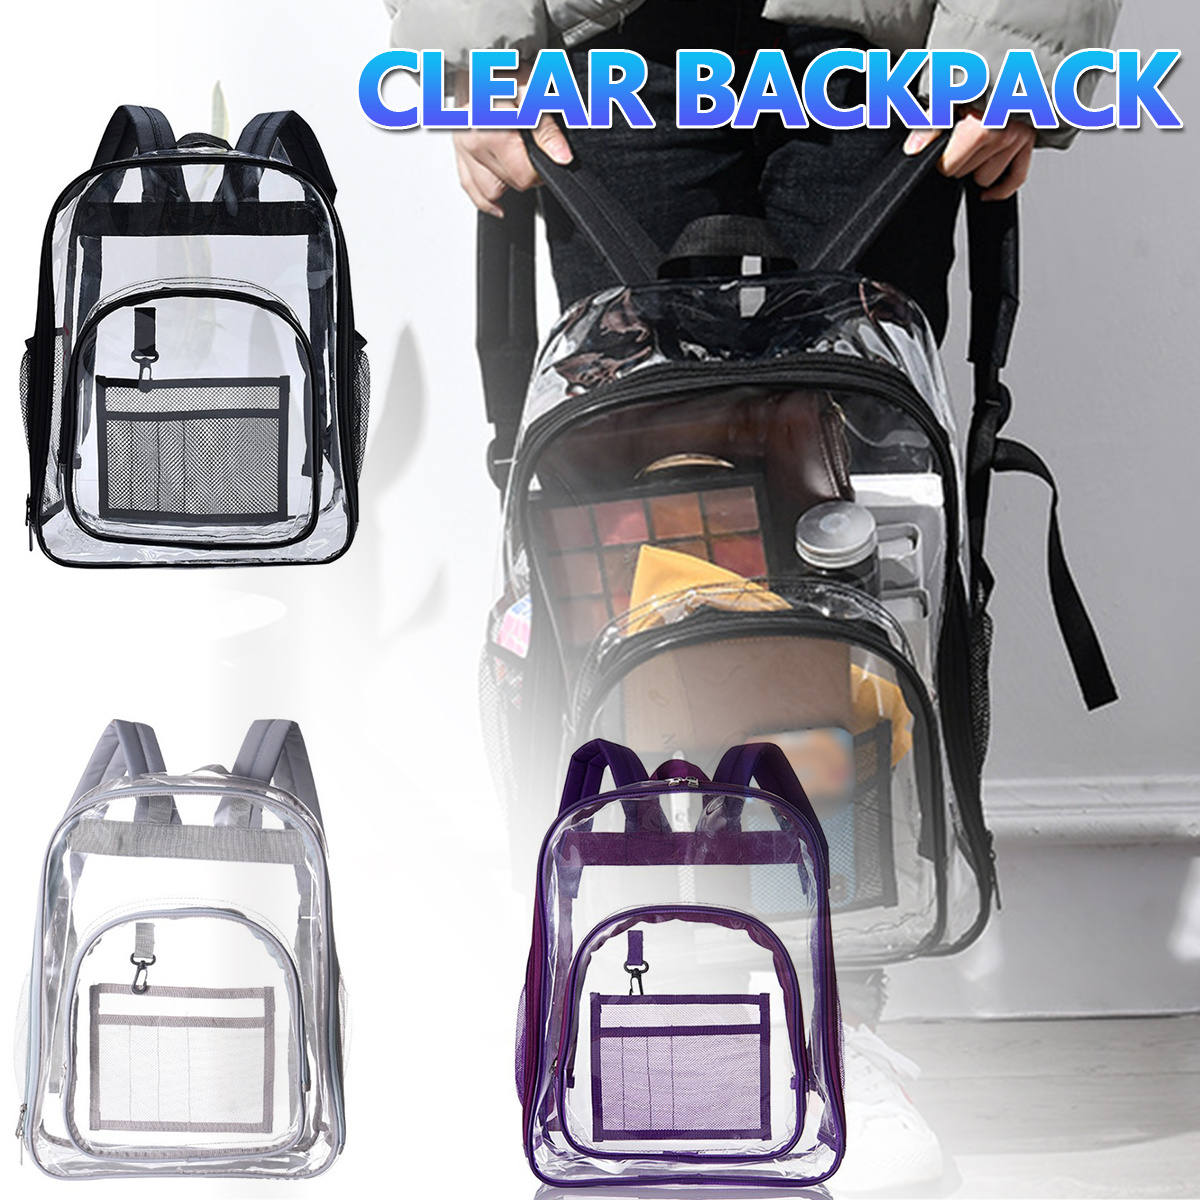 Clear Backpack Heavy Duty Clear Bookbag Transparent Backpack See